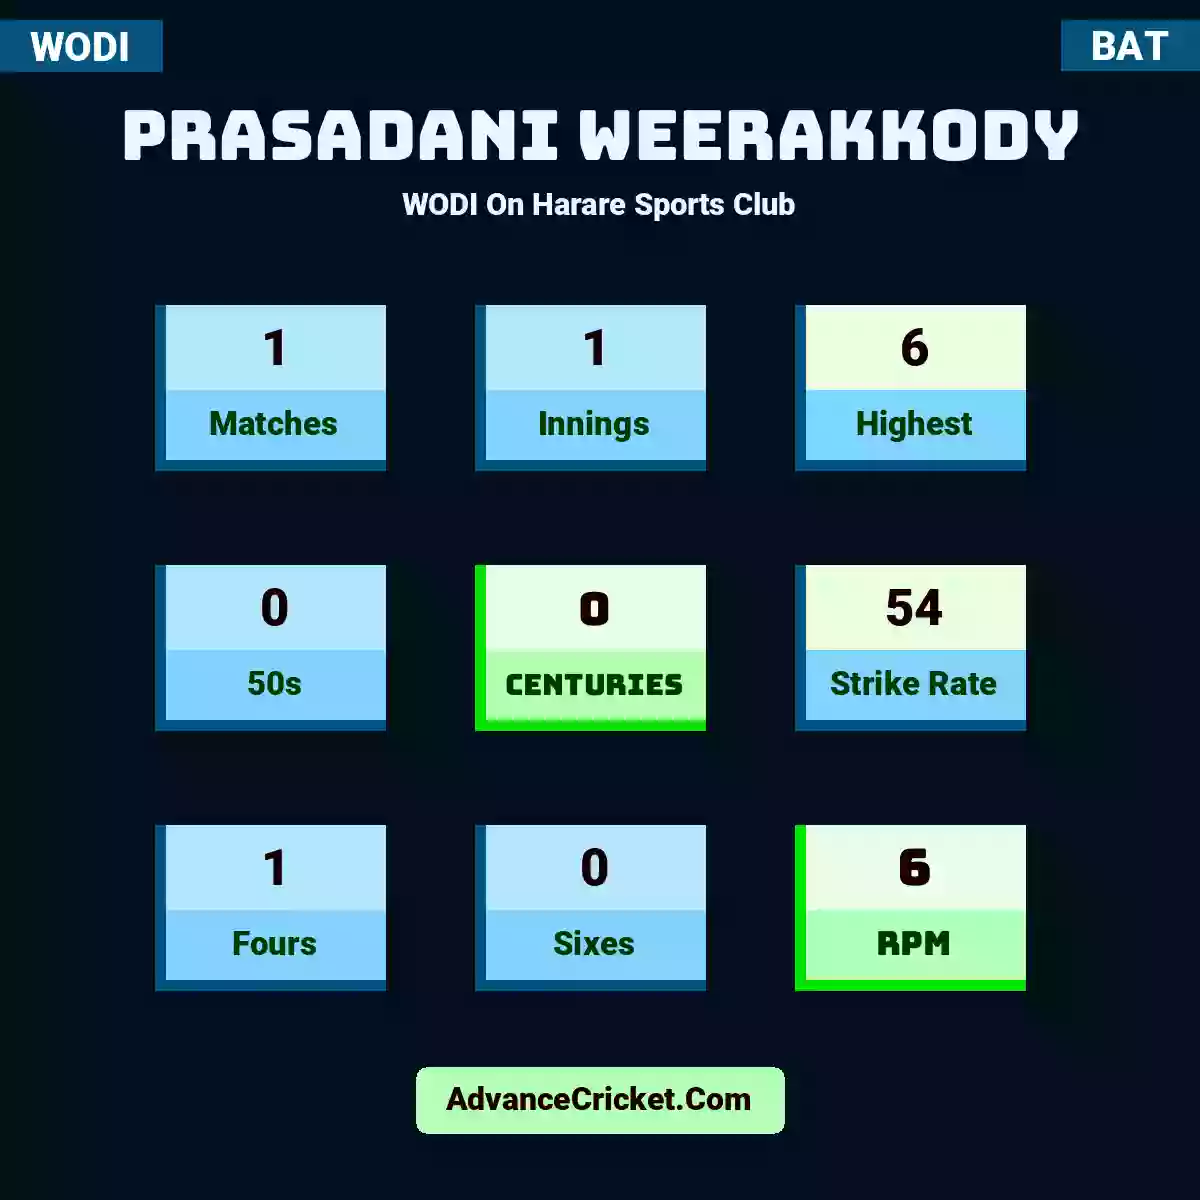 Prasadani Weerakkody WODI  On Harare Sports Club, Prasadani Weerakkody played 1 matches, scored 6 runs as highest, 0 half-centuries, and 0 centuries, with a strike rate of 54. P.Weerakkody hit 1 fours and 0 sixes, with an RPM of 6.